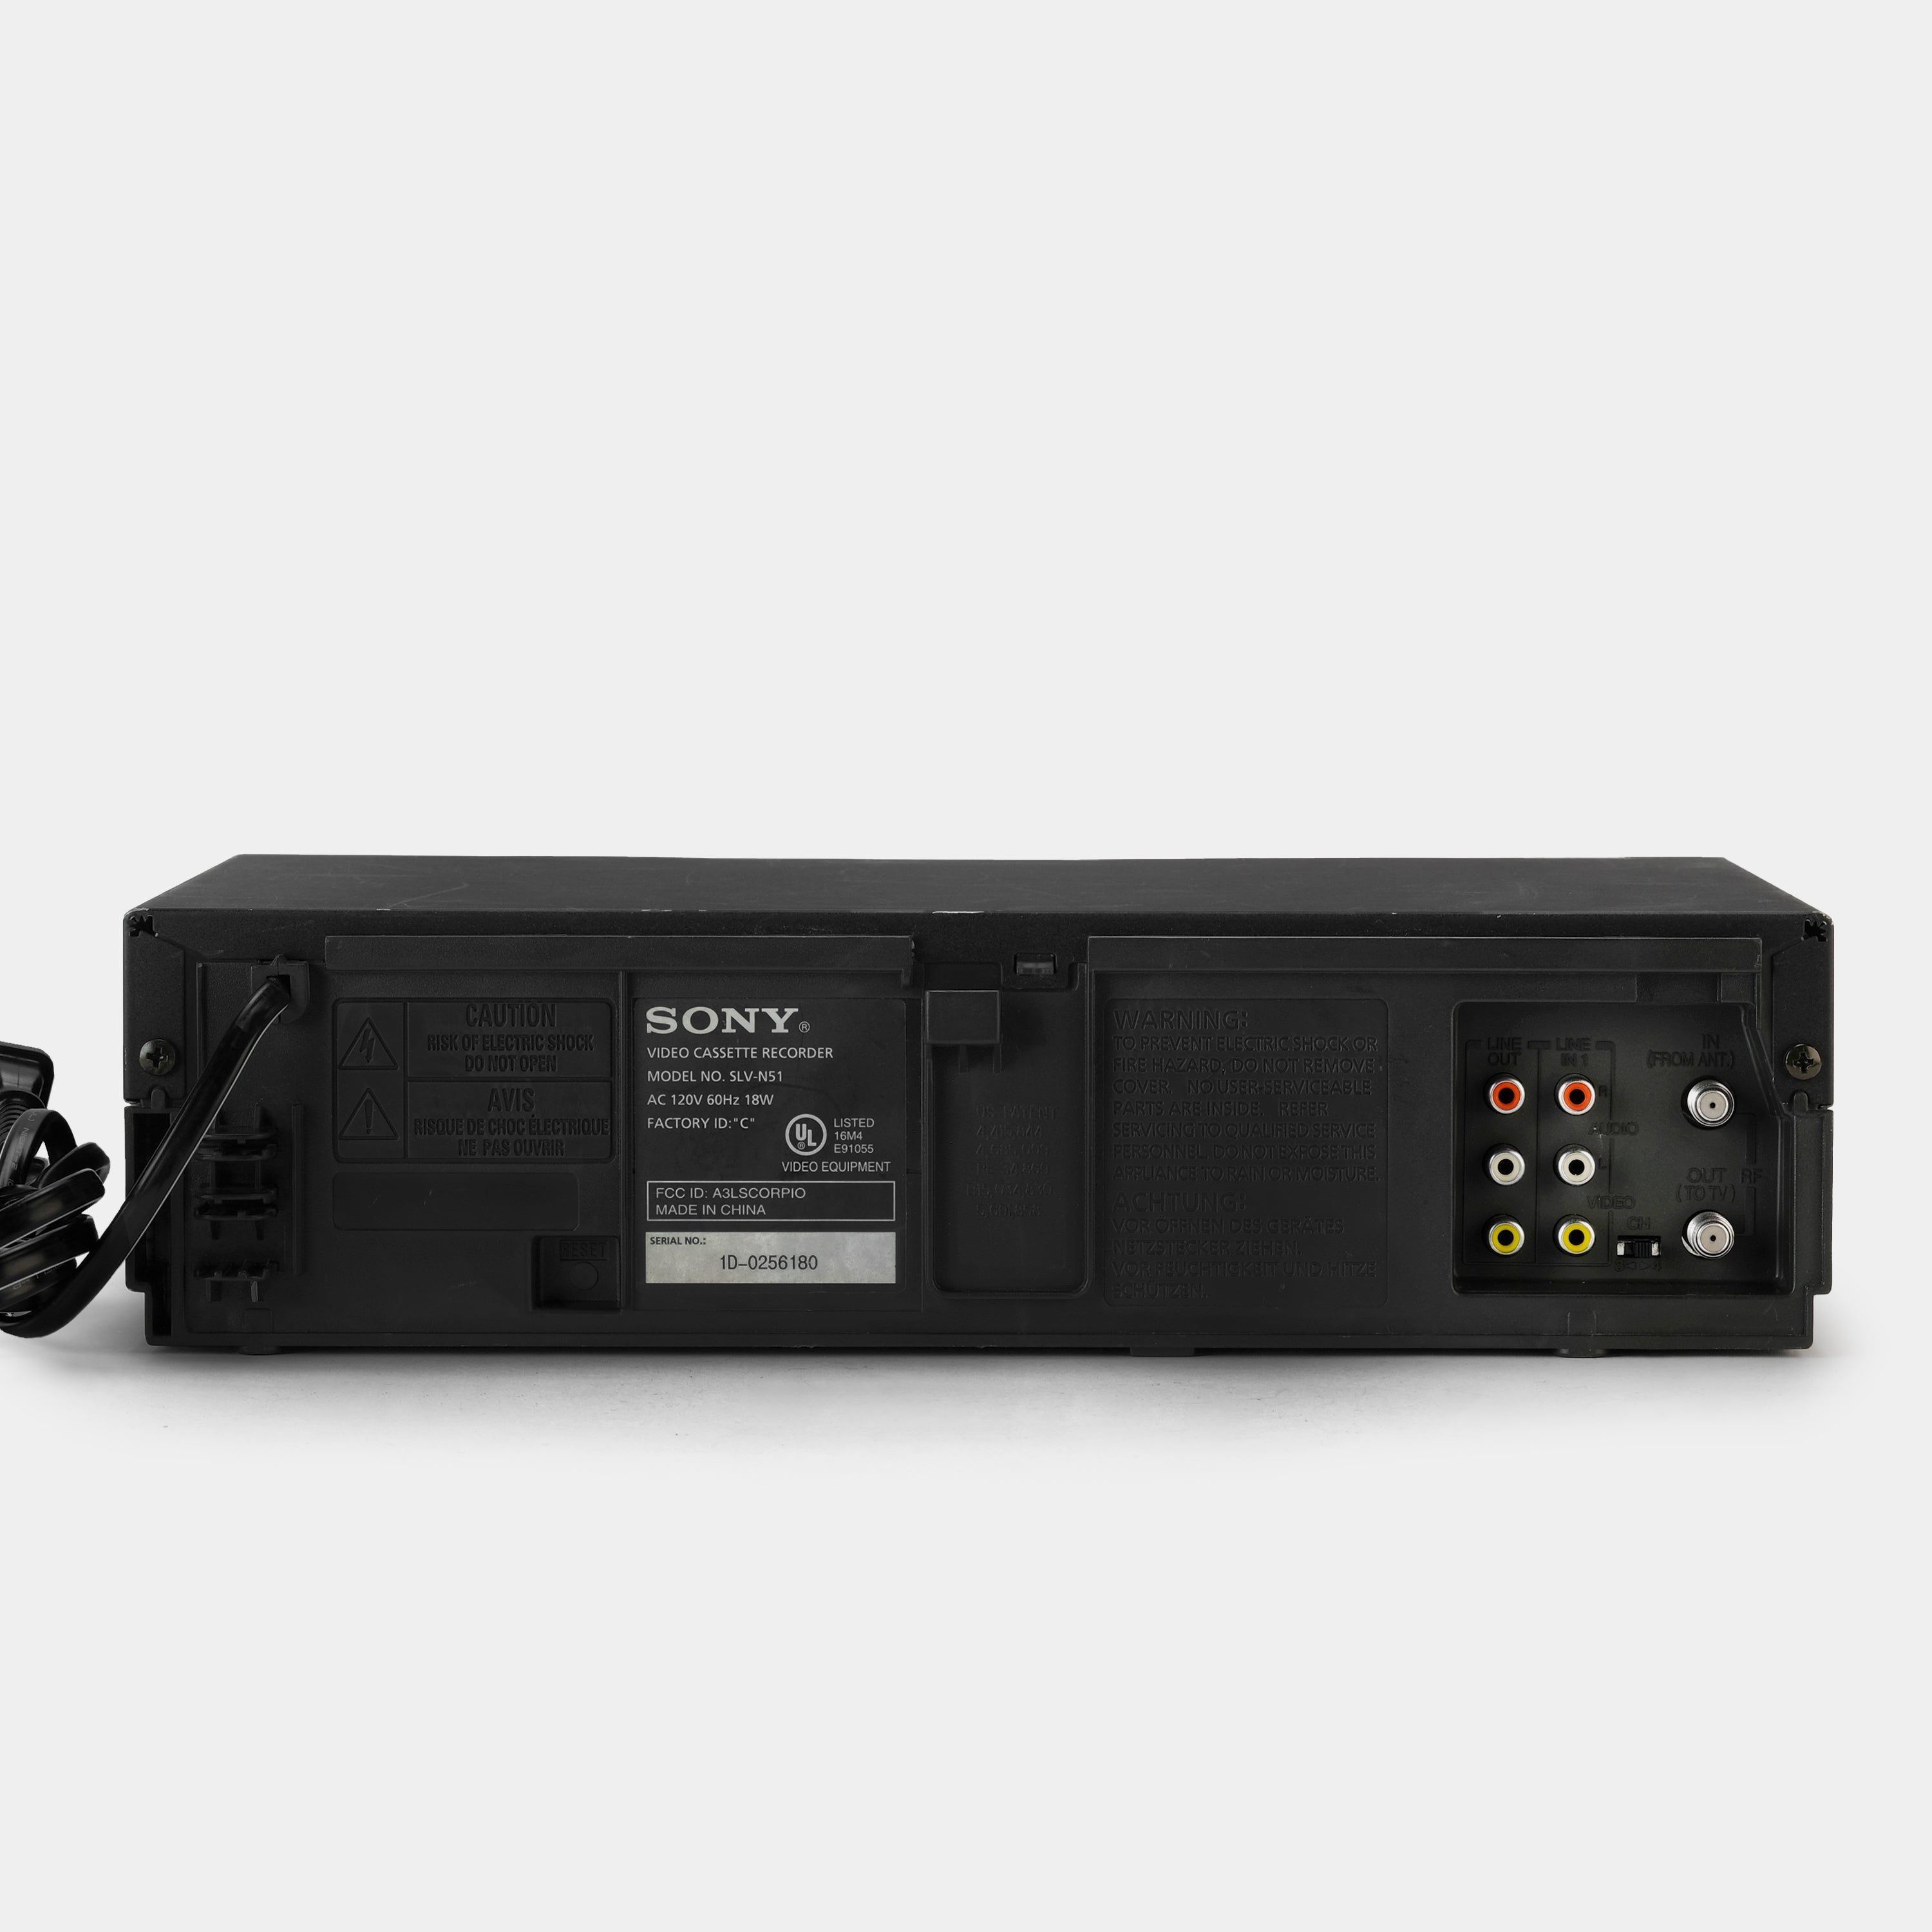 Sony SLV-N51 VCR VHS Player